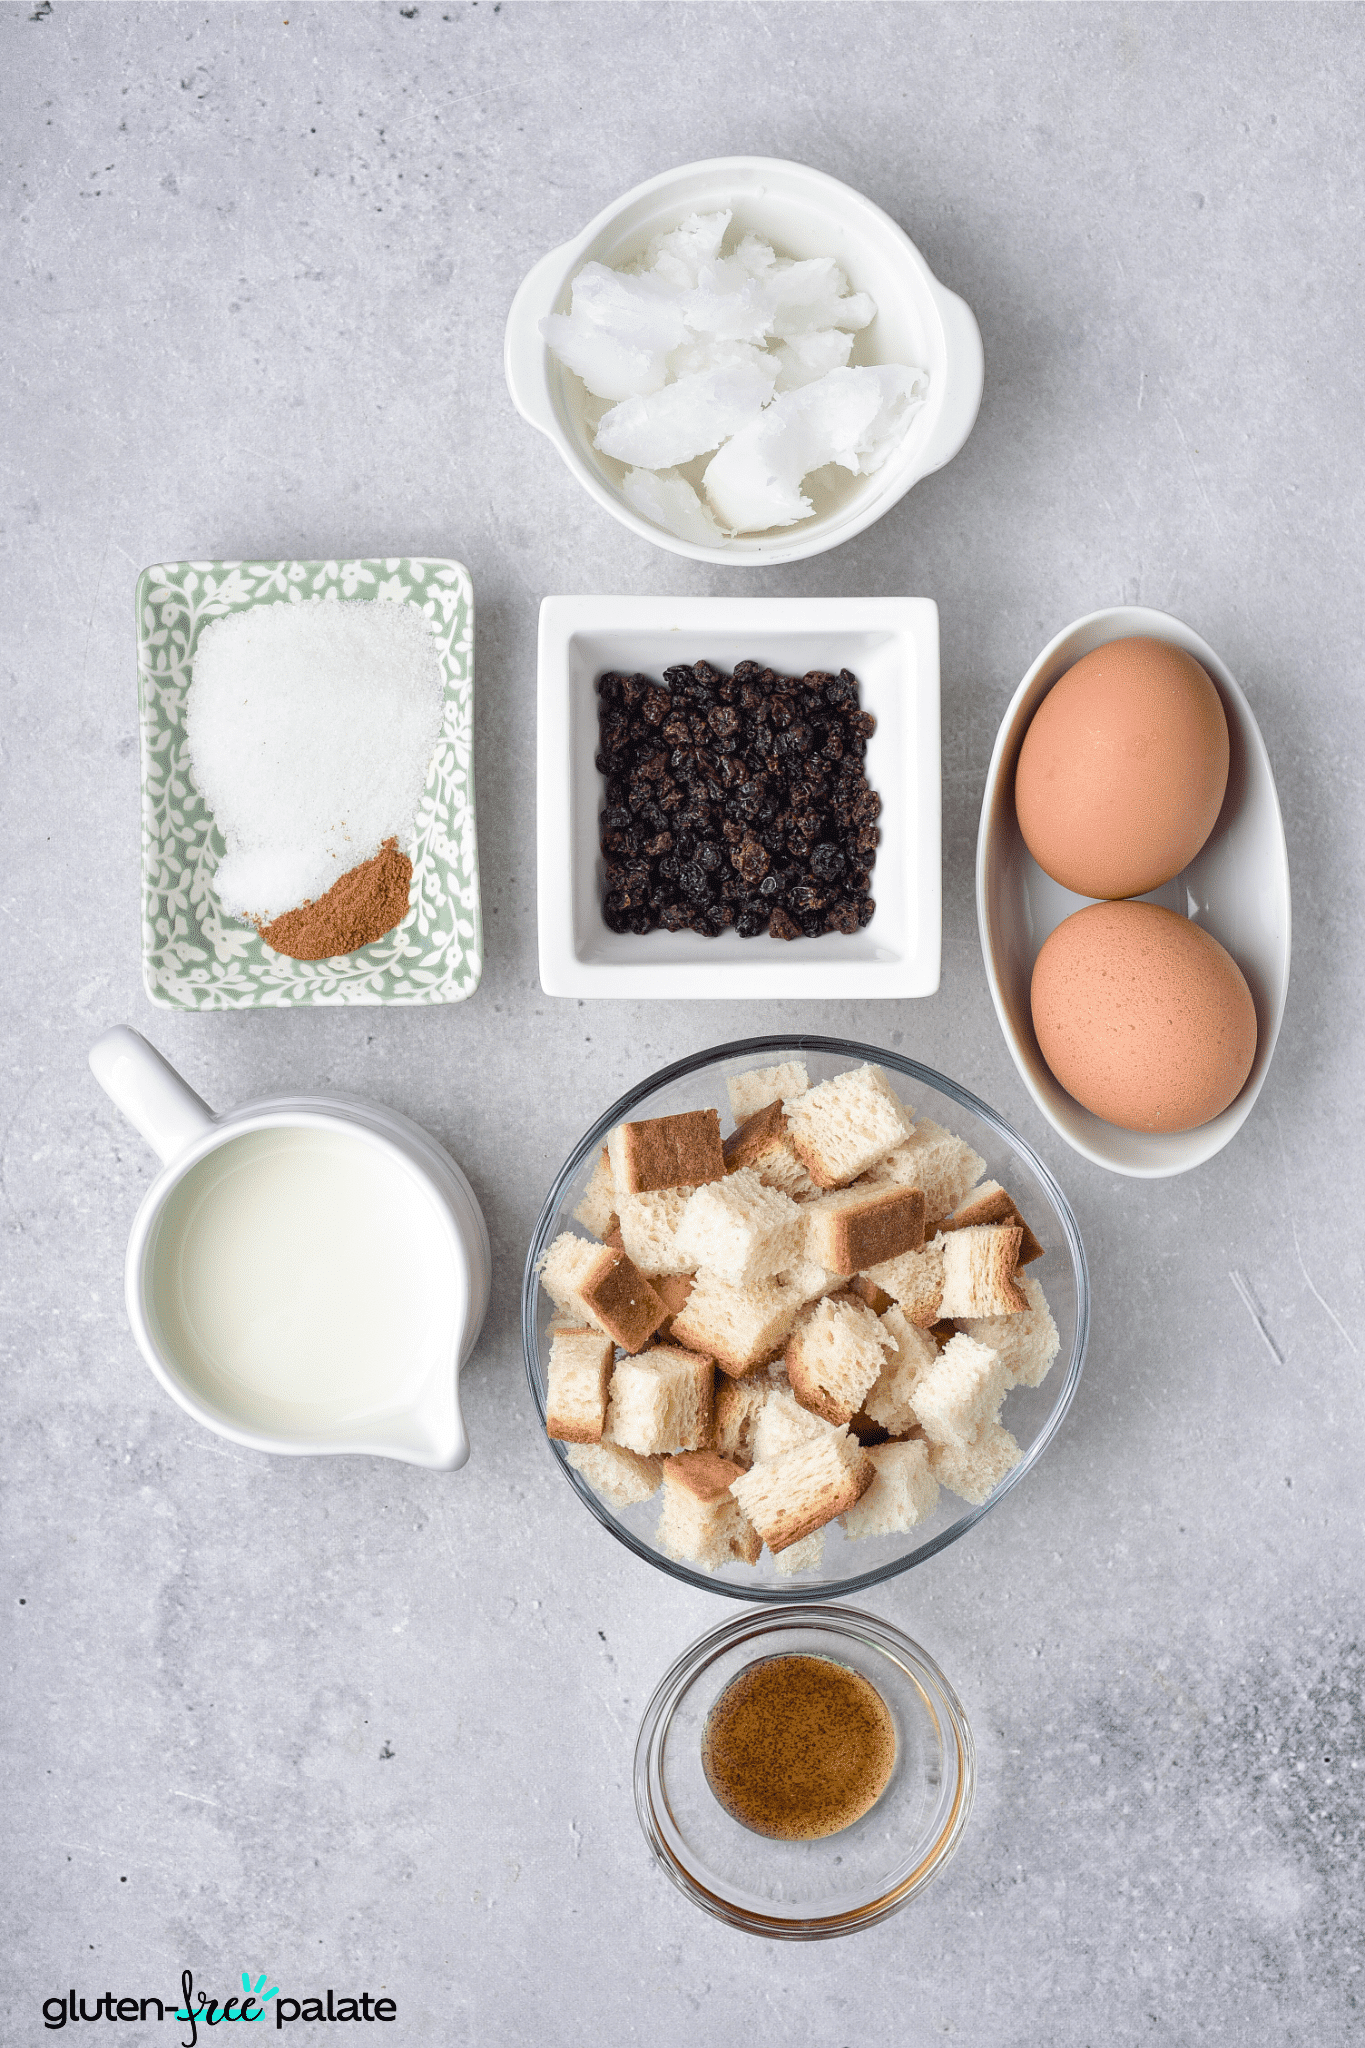 Gluten-free bread pudding ingredients